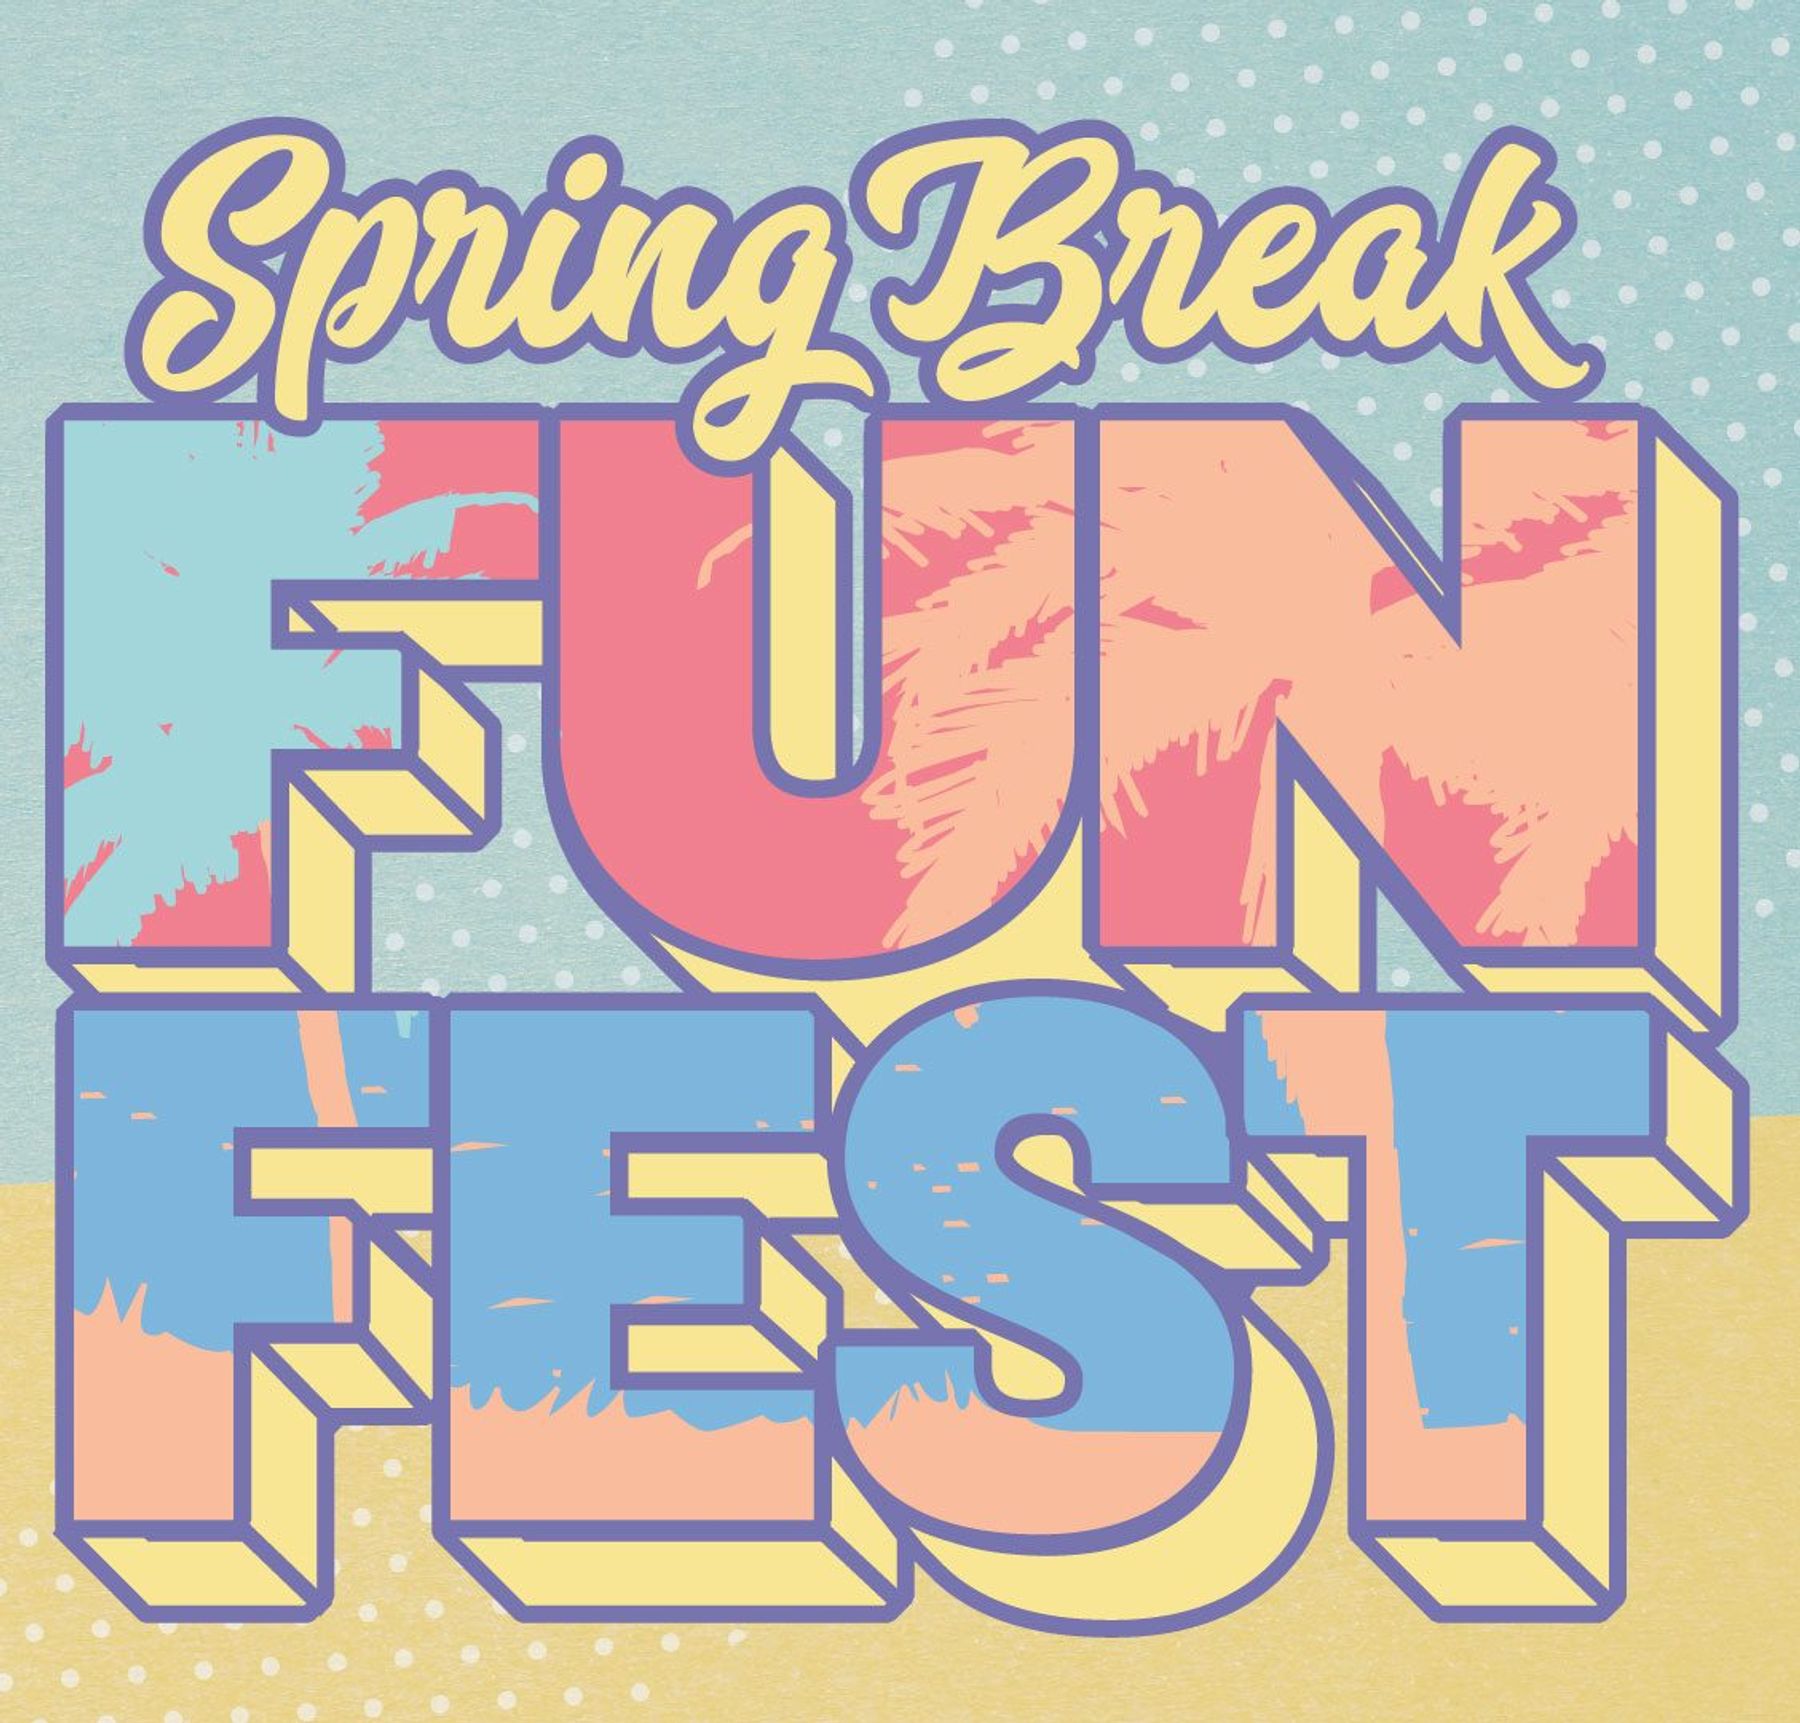 Spring Break Fun Fest on Skydeck Downtown Nashville